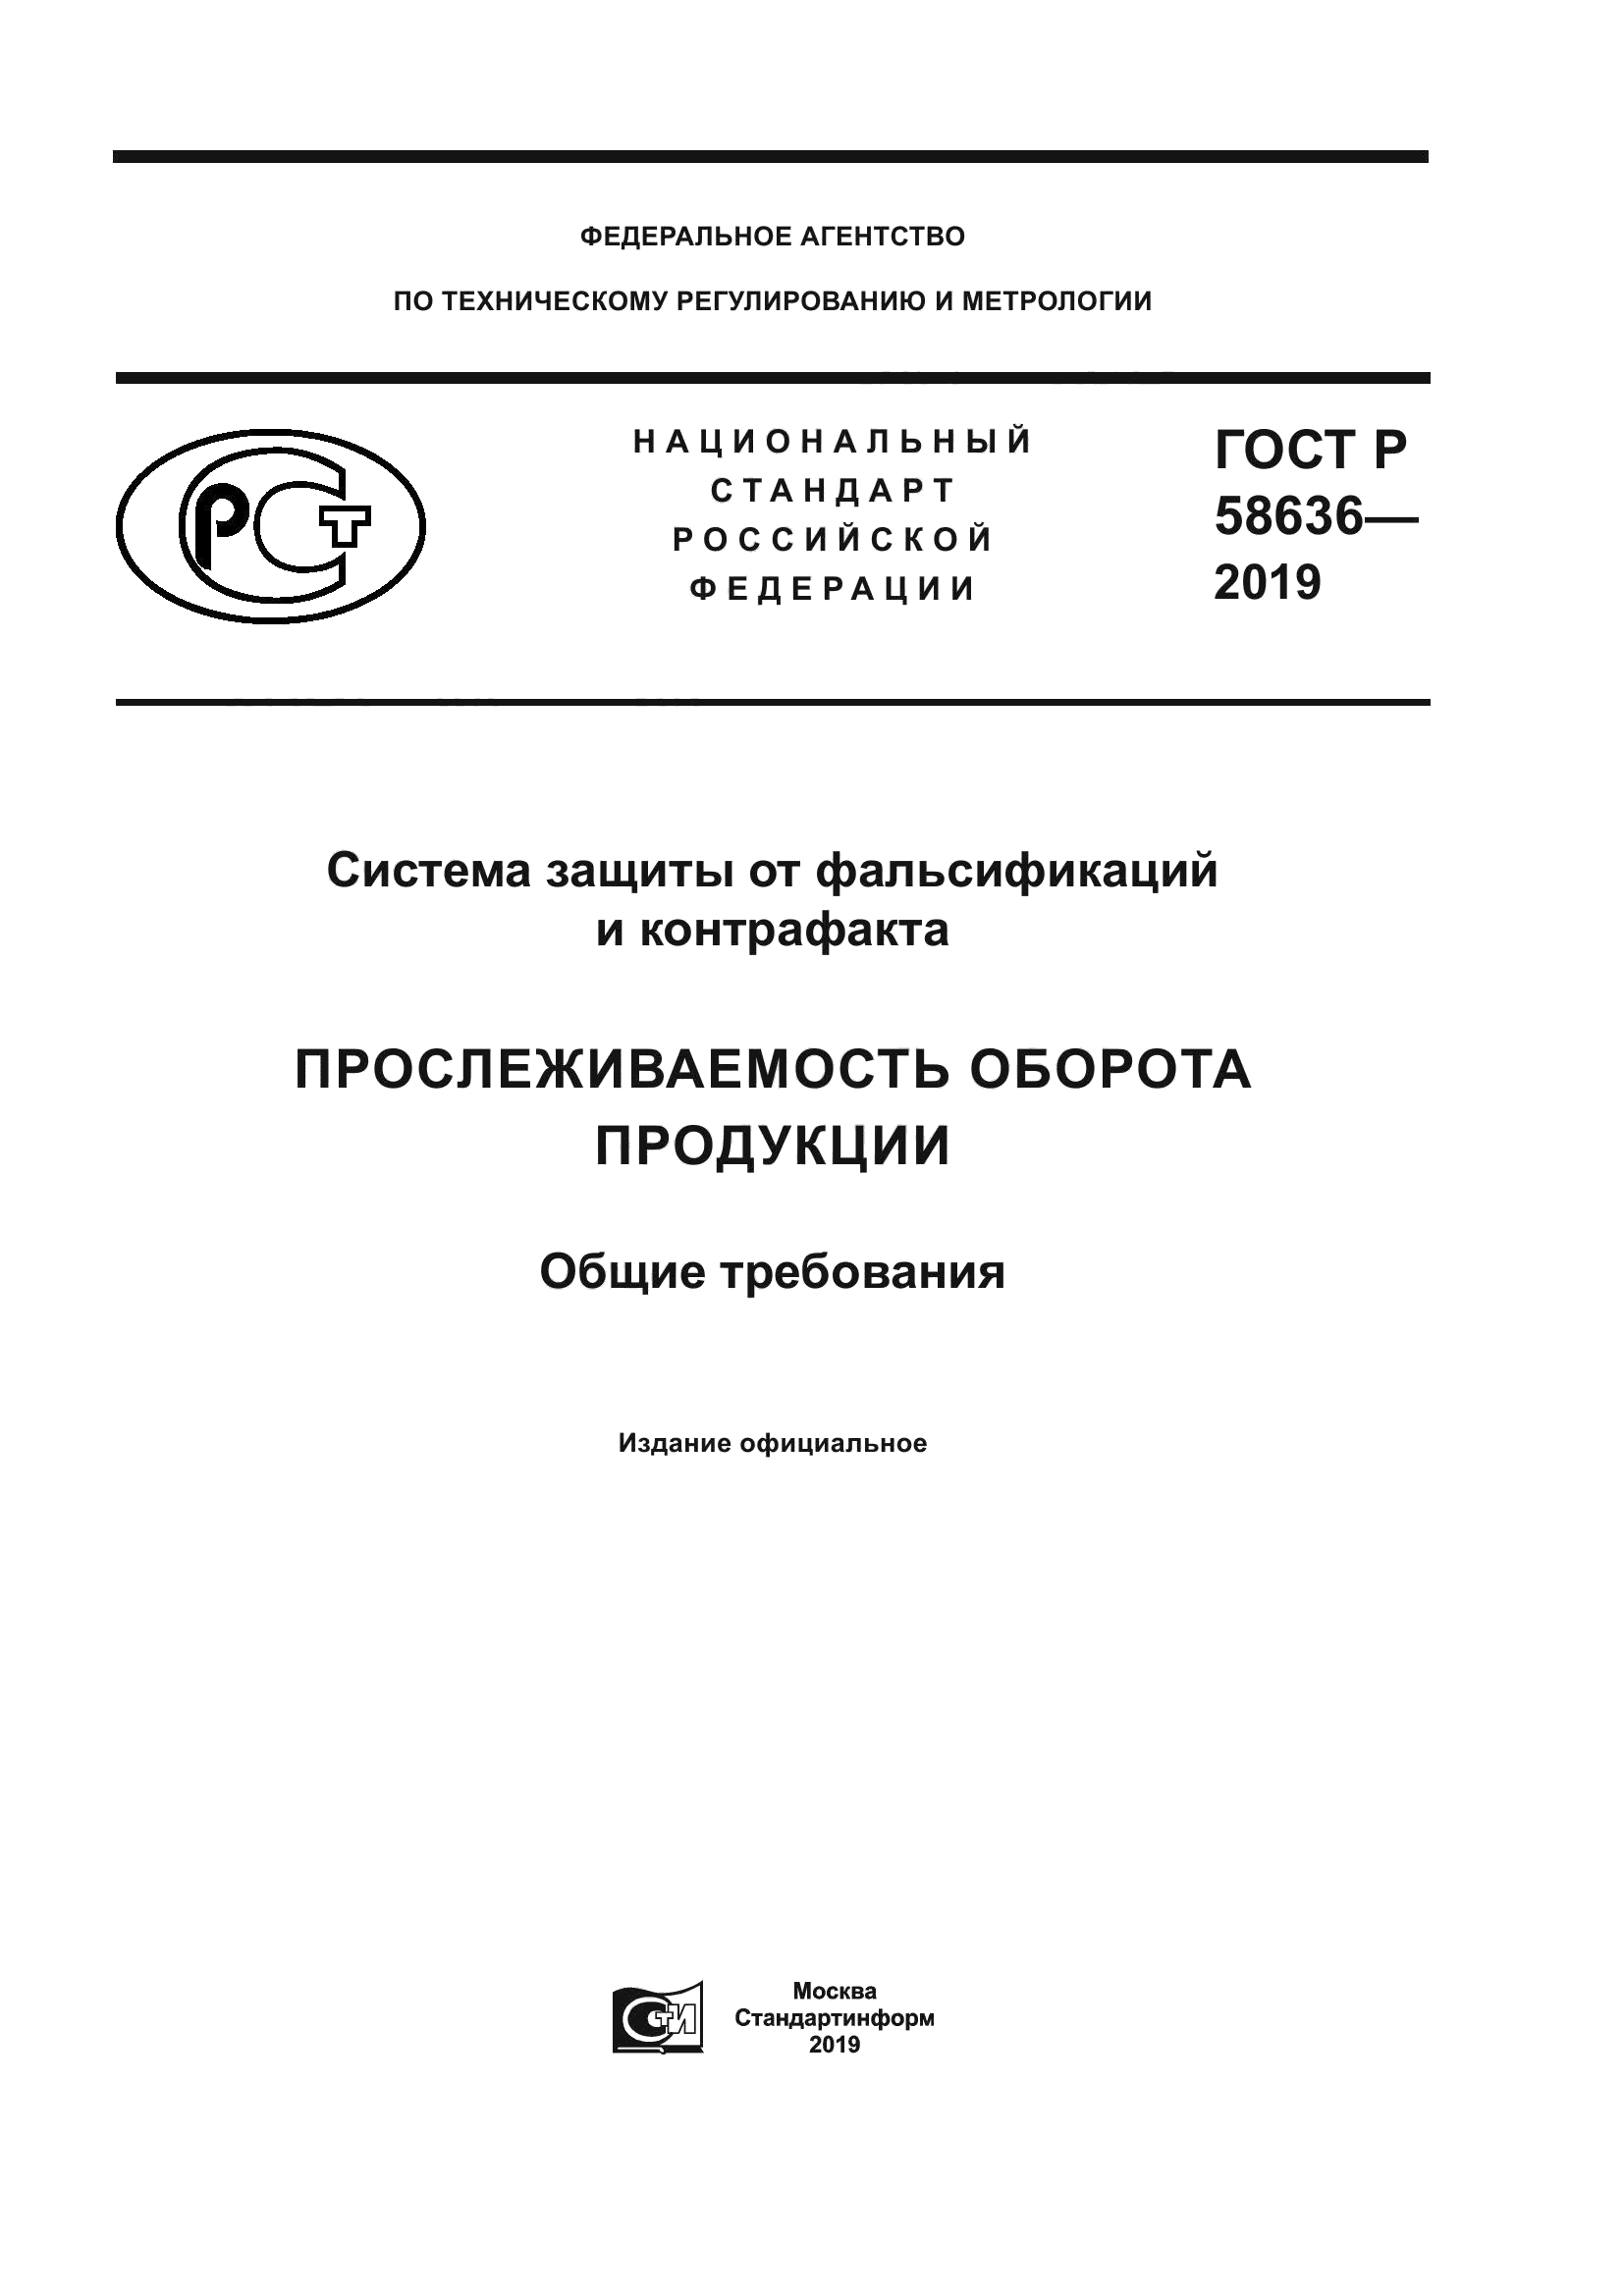 ГОСТ Р 58636-2019